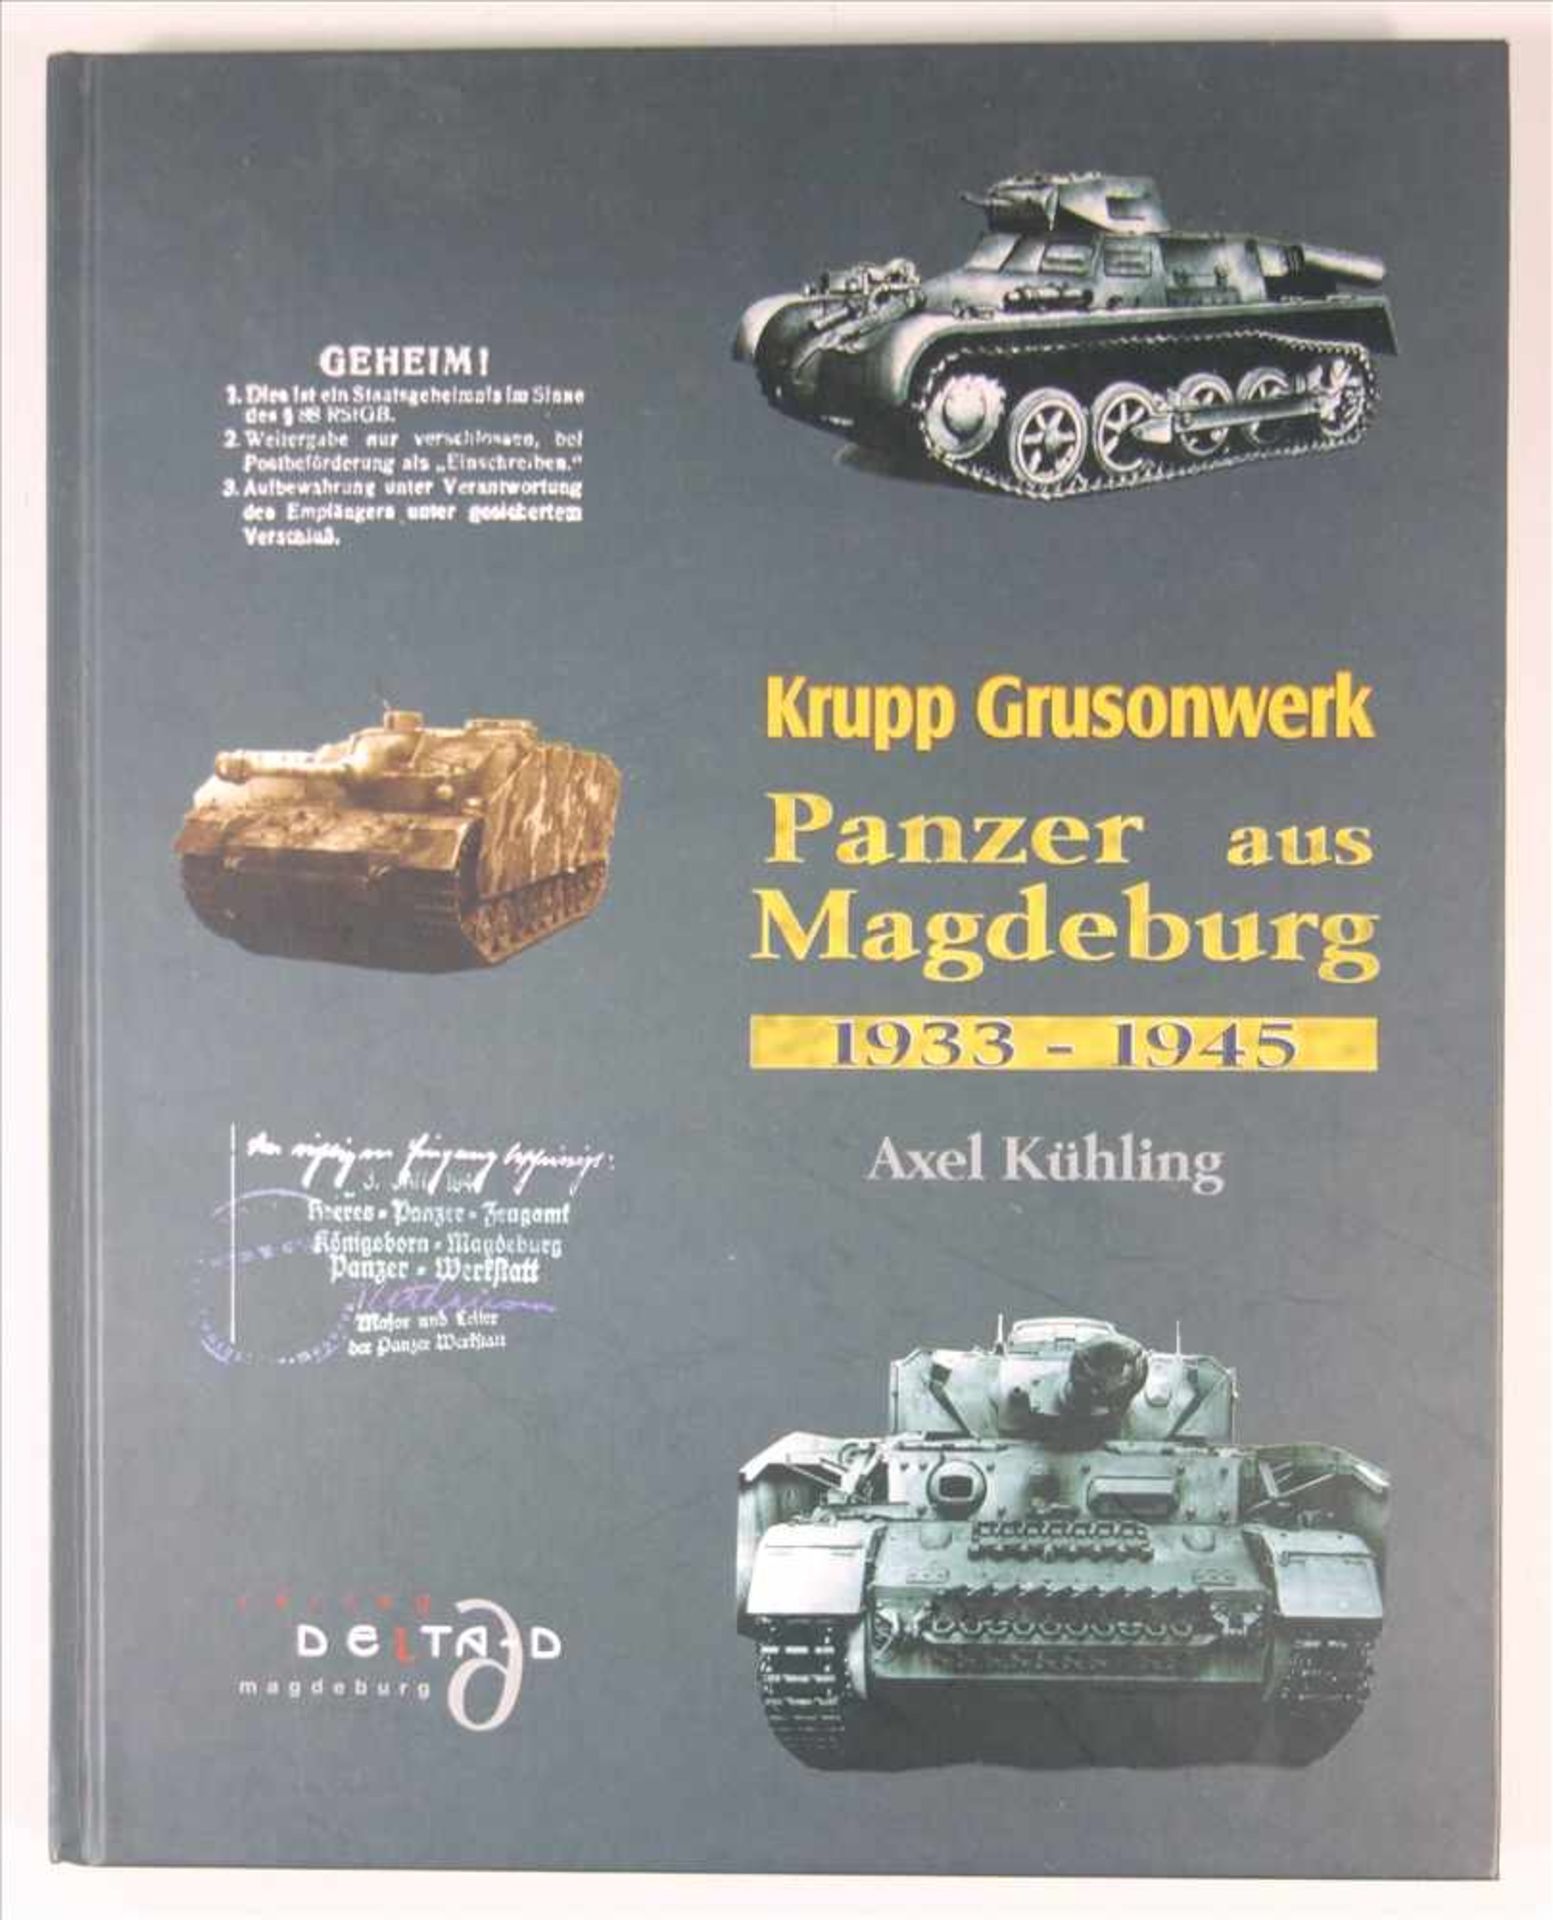 Krupp Grusonwerk, Panzer aus Magdeburg 1933-1945, von Axel Kühling, reich bebildert, Delta-D-